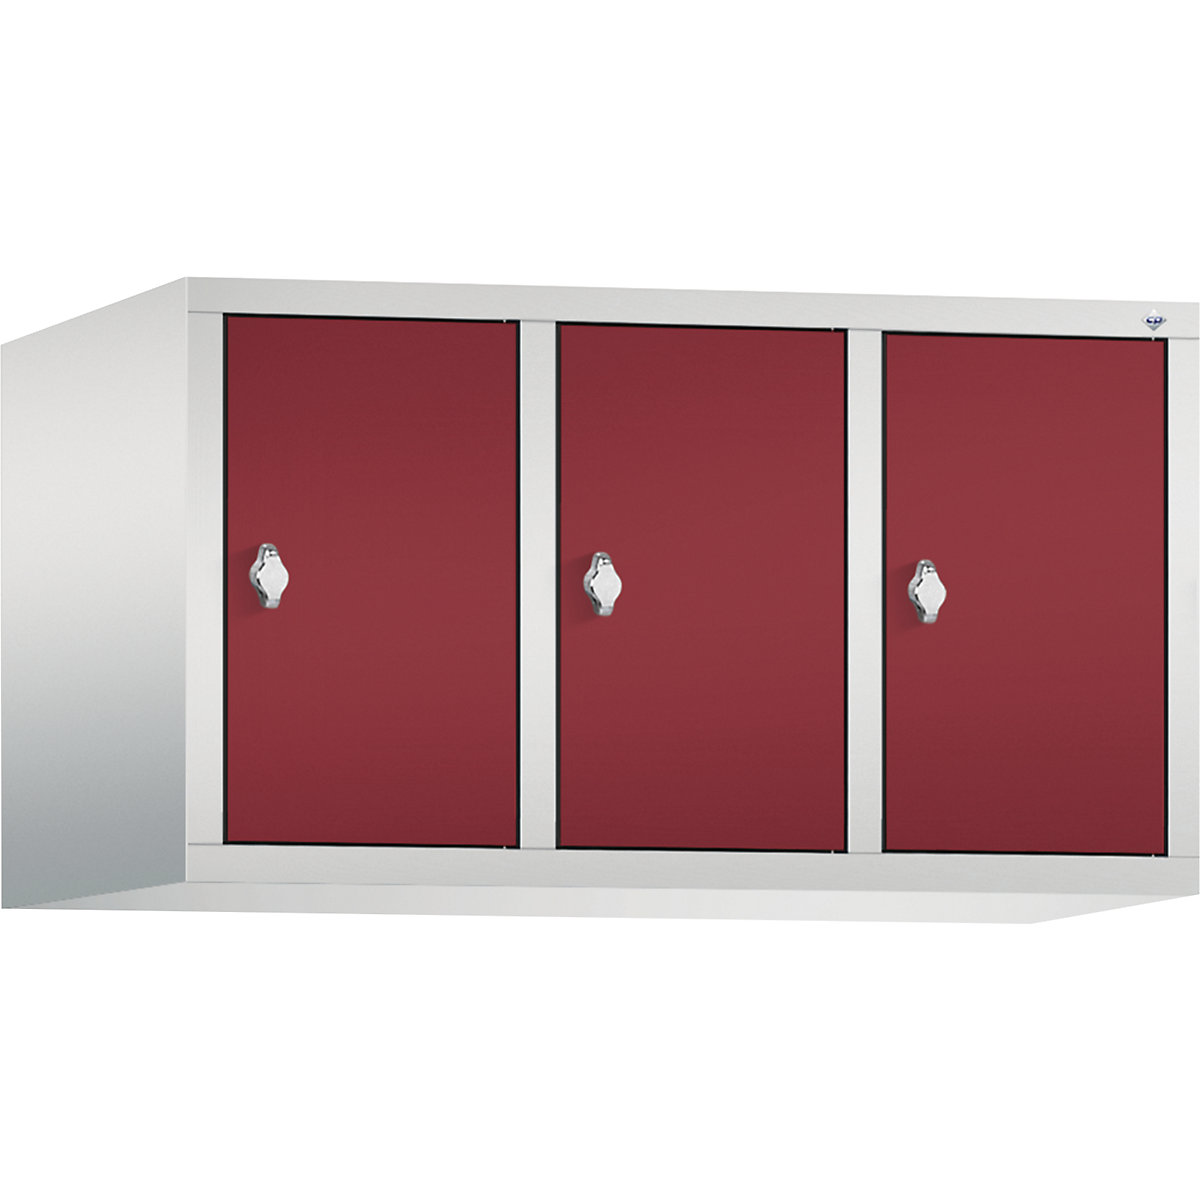 C+P – Altillo CLASSIC, 3 compartimentos, anchura de compartimento 300 mm, gris luminoso / rojo rubí